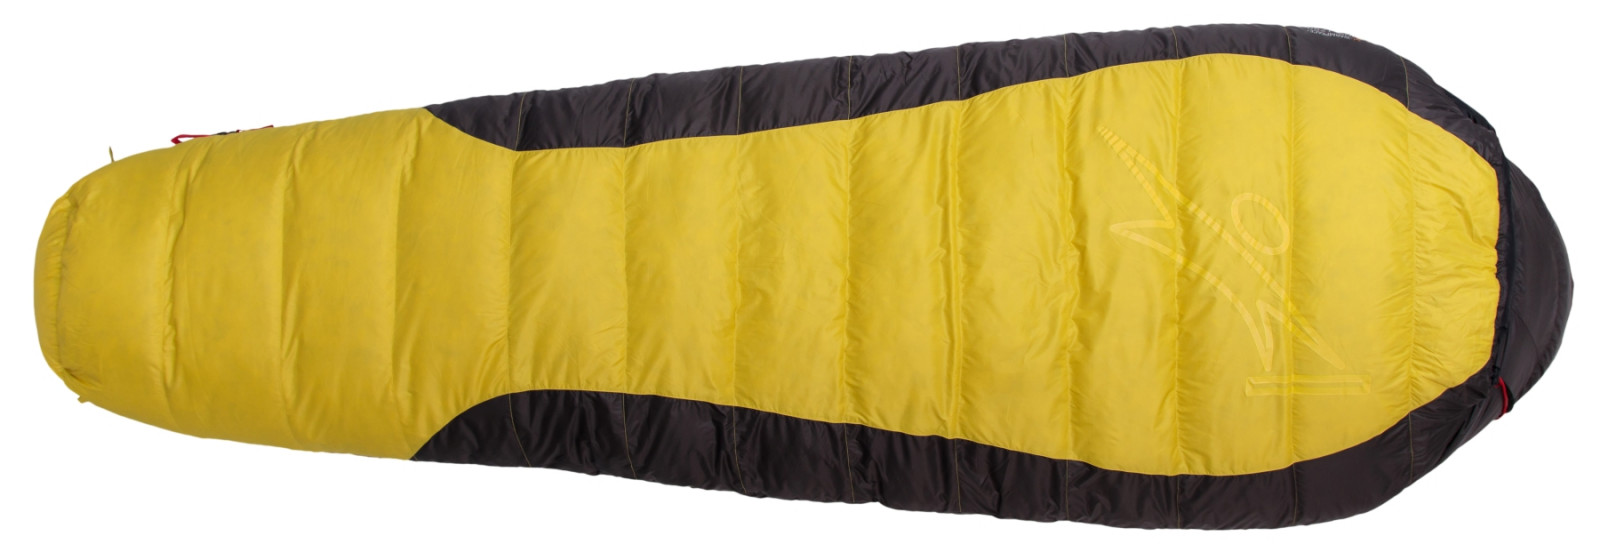 Spacák Warmpeace Viking 1200 170 Cm Wide Zip: Levý / Barva: žlutá/černá